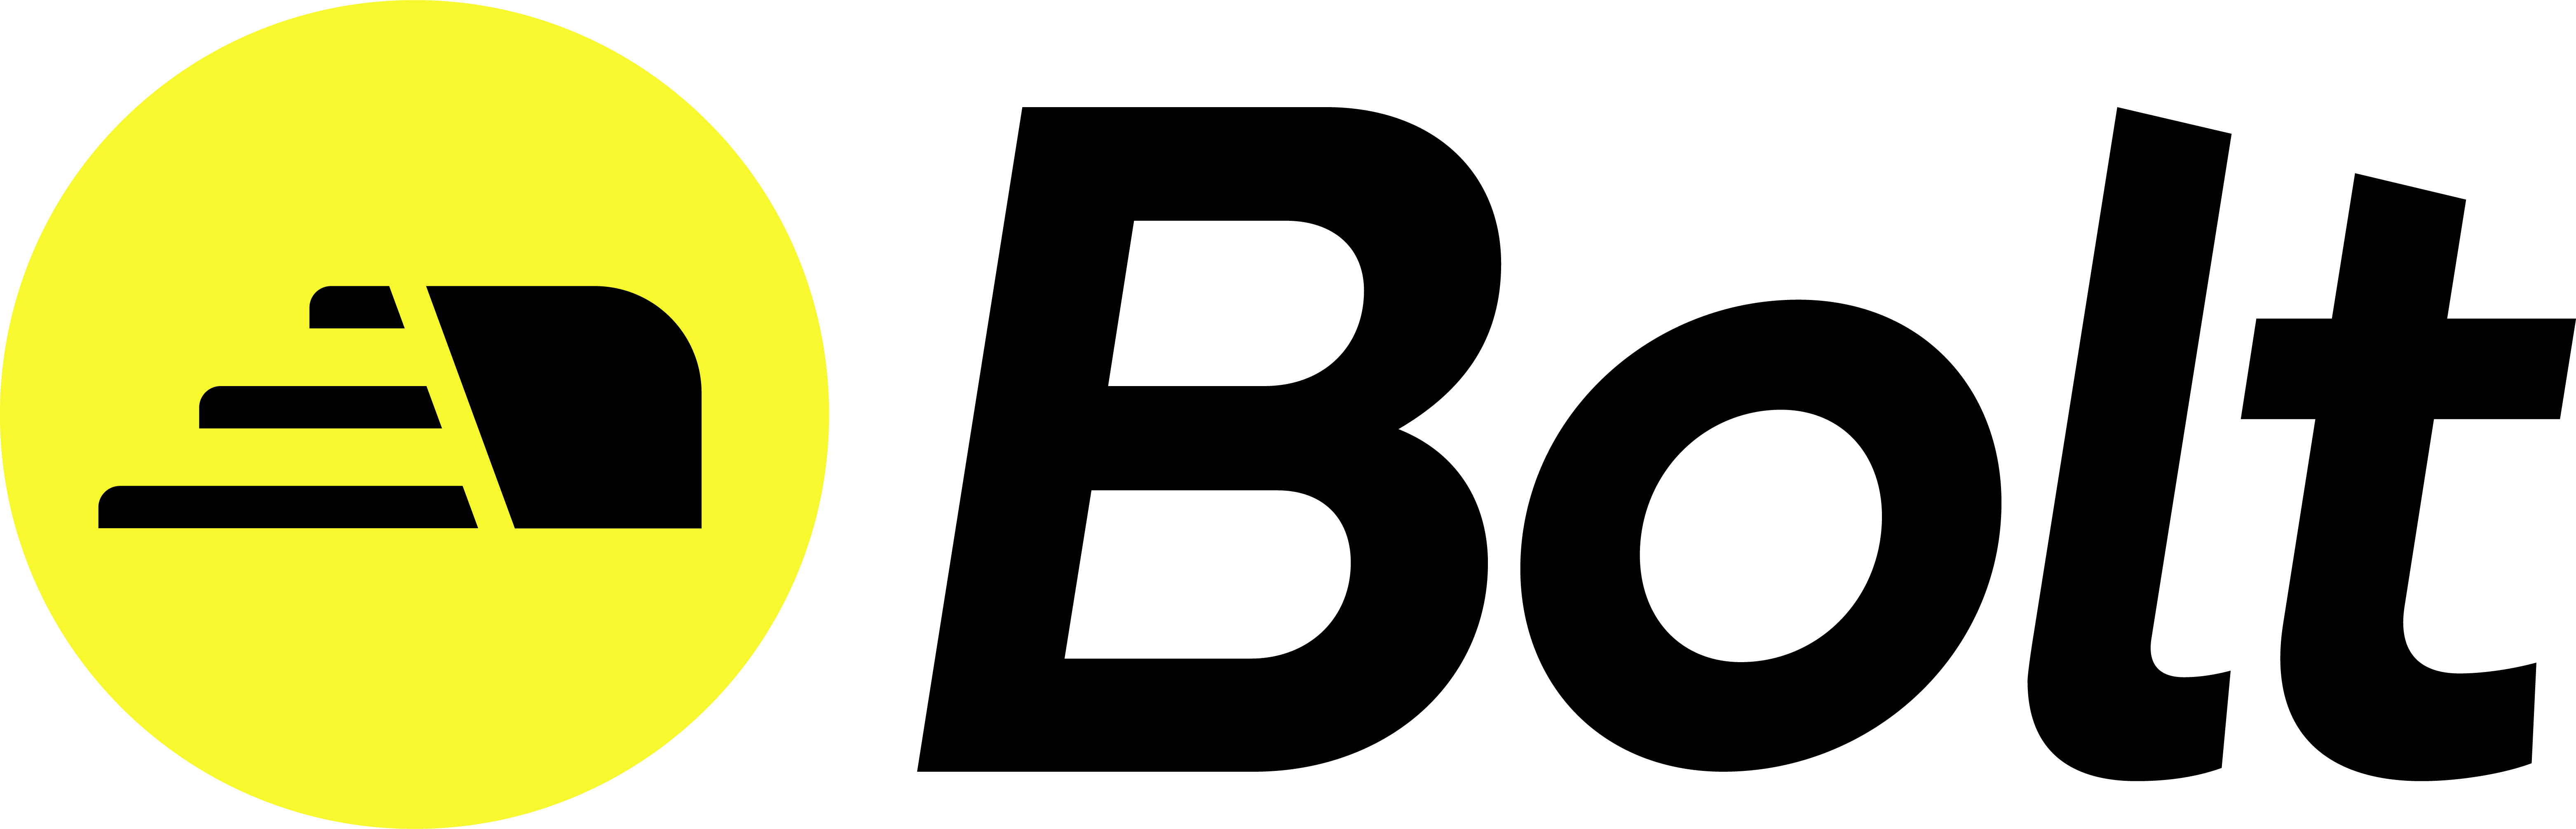 Bolt System Logo